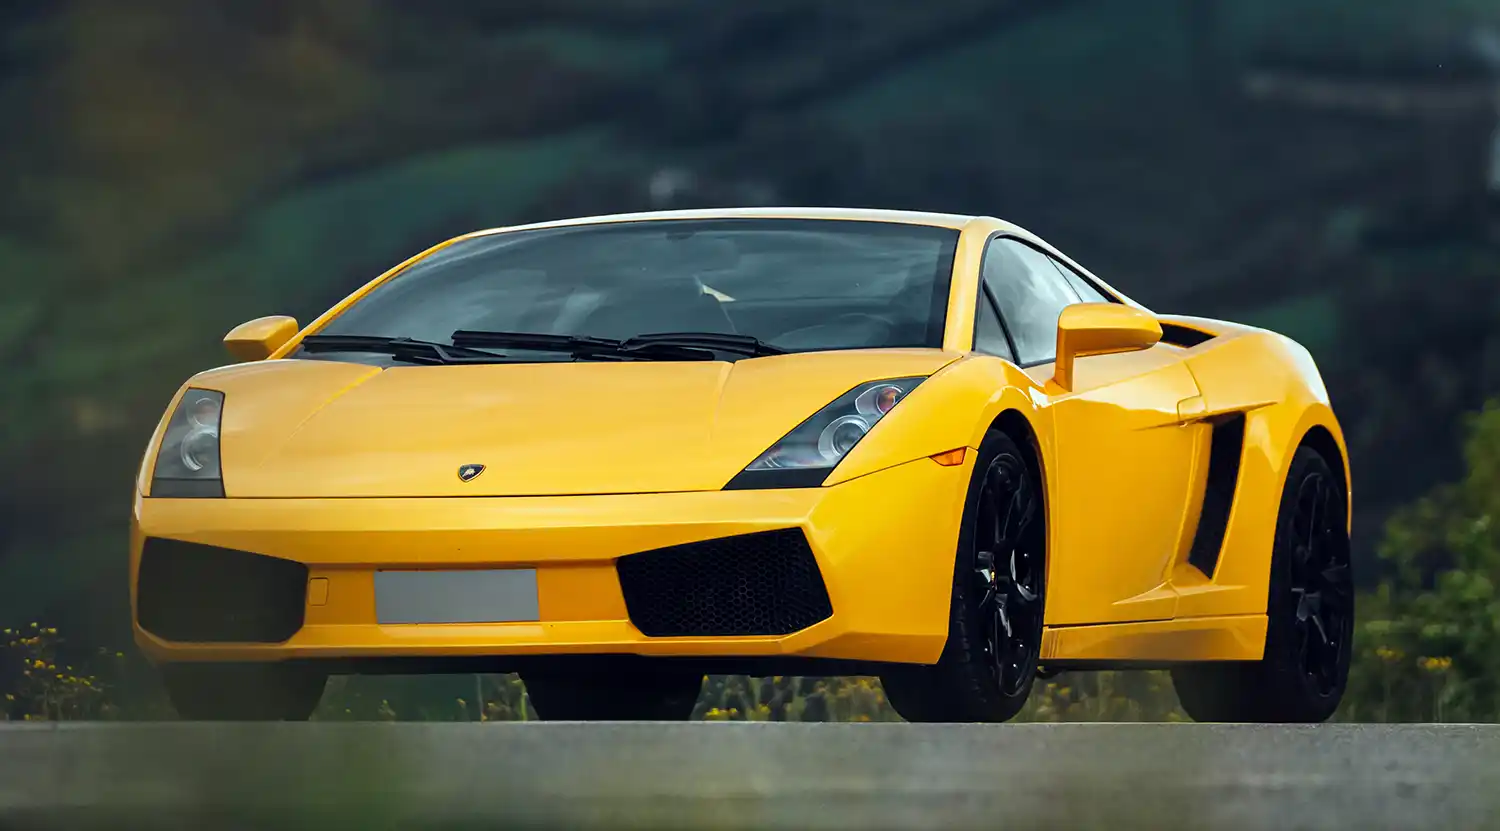 History Of Gallardo - The “Small” Lamborghini With A Huge Impact